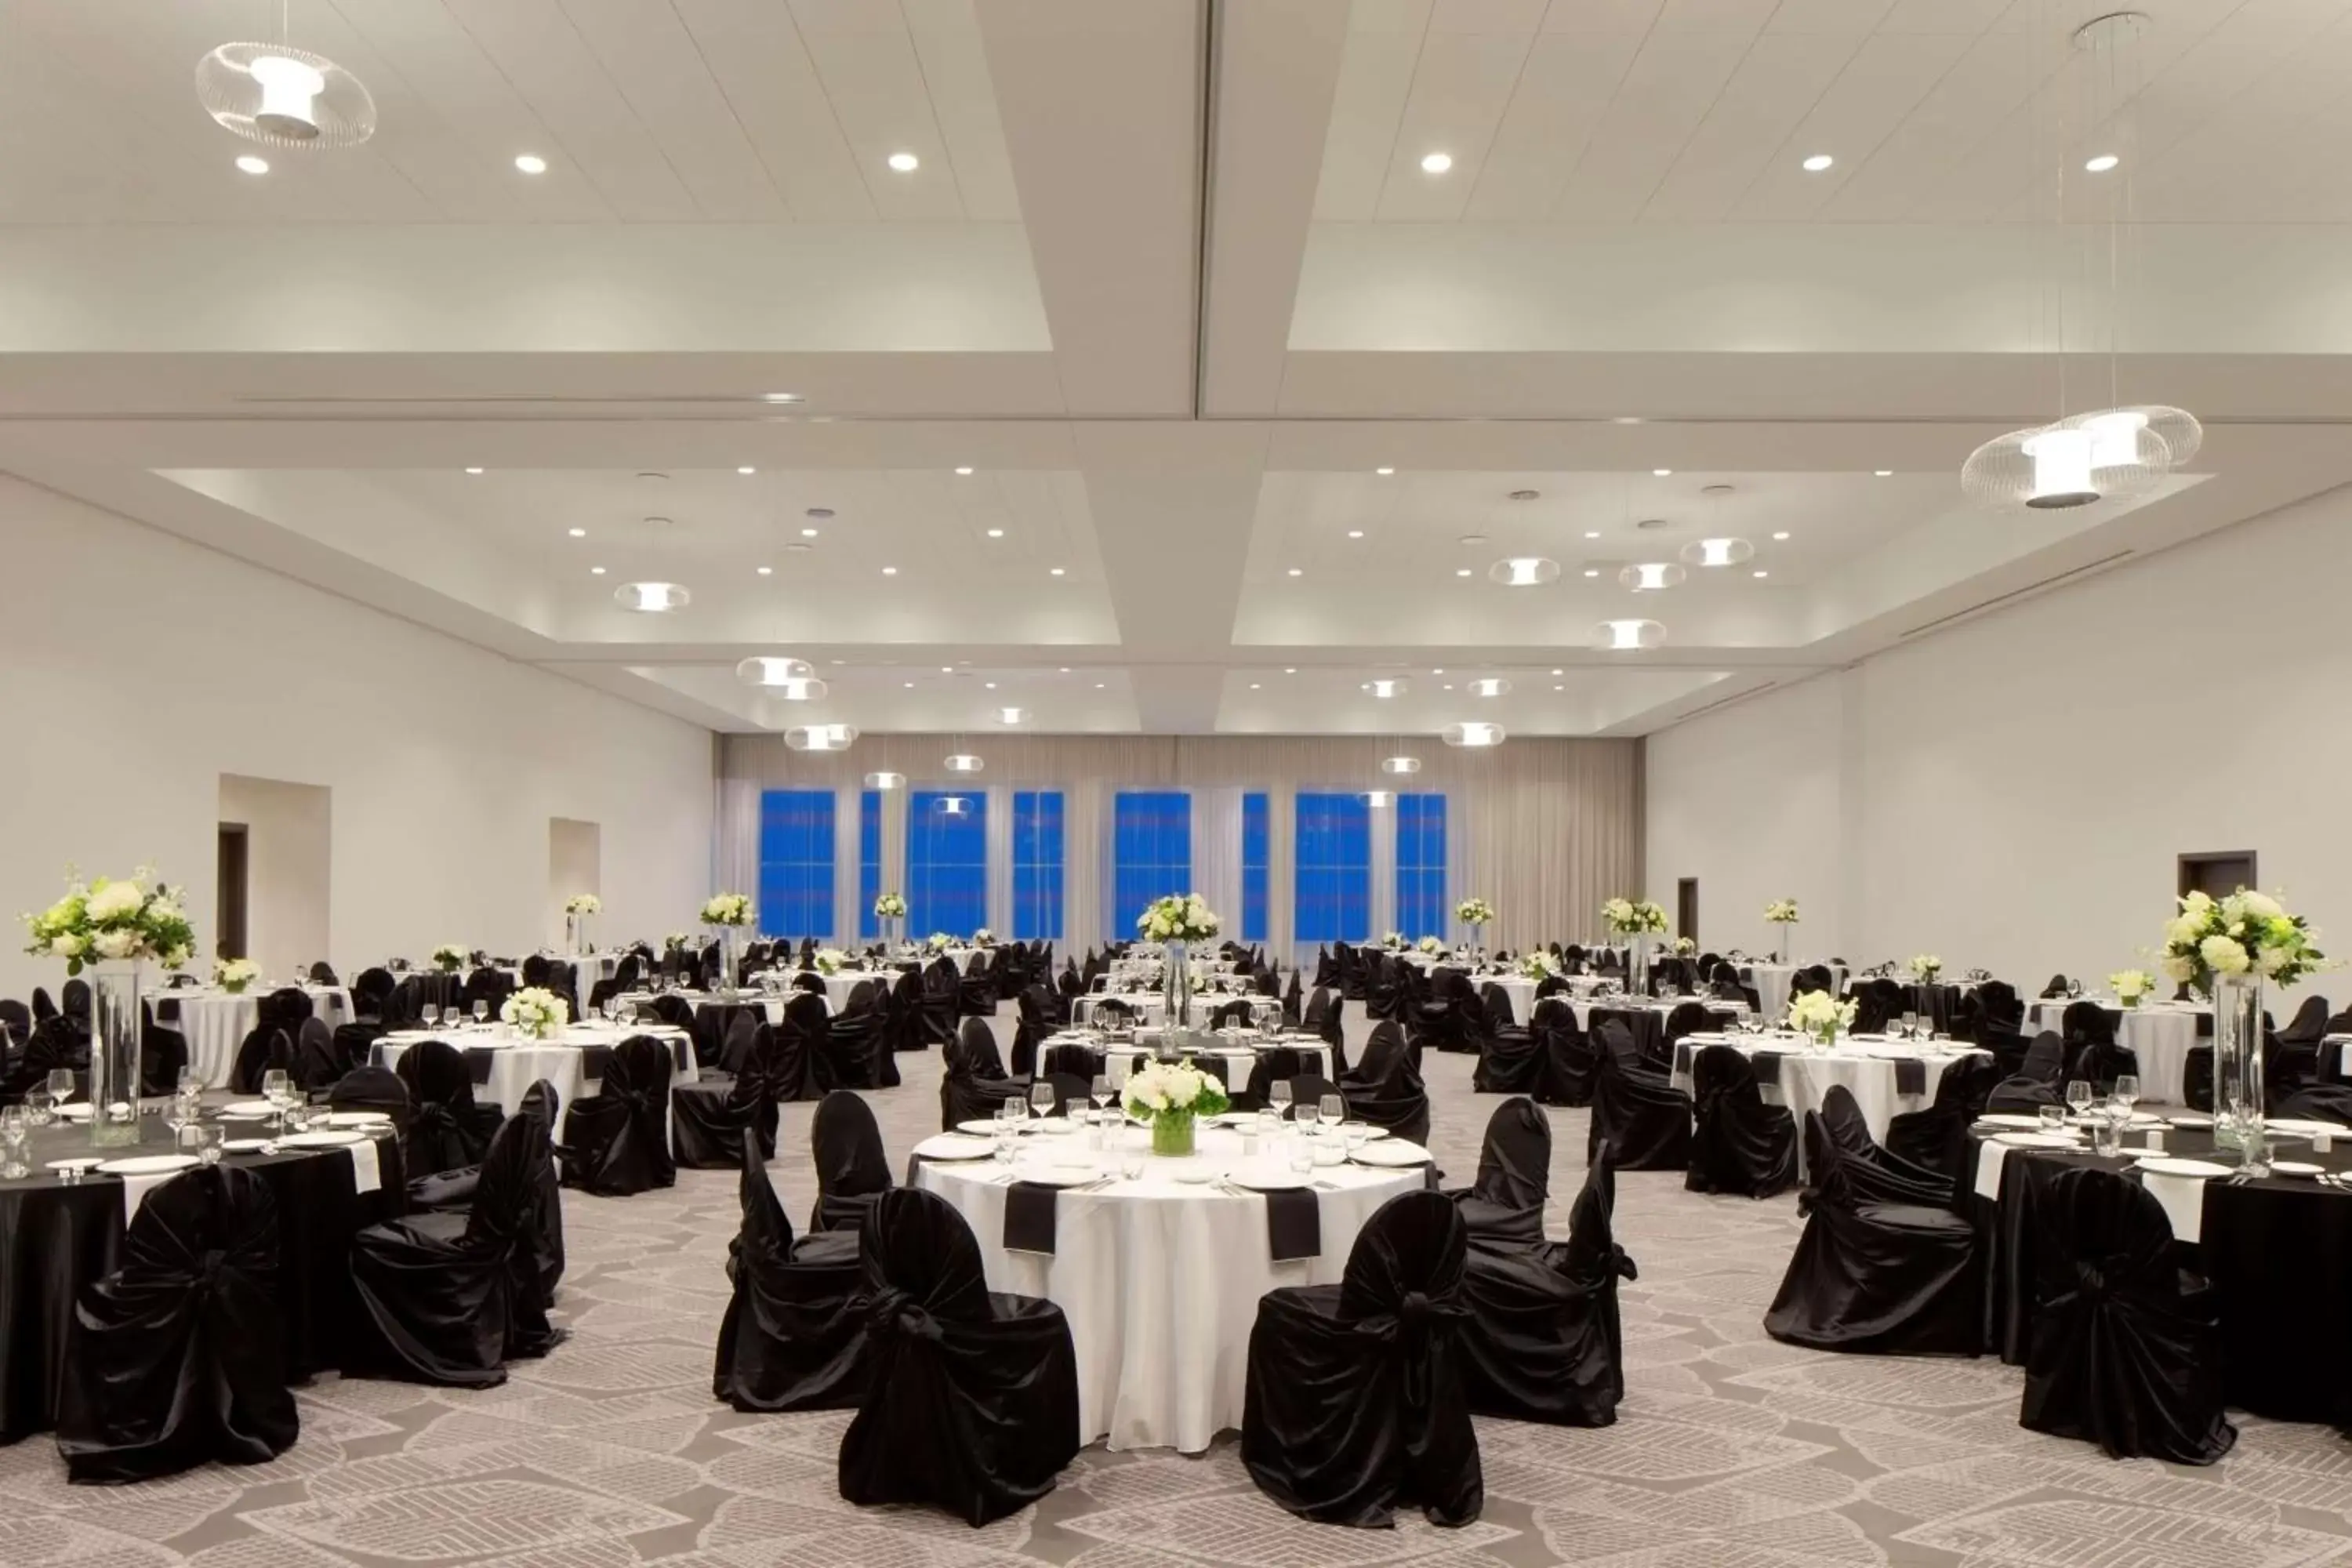 Banquet/Function facilities, Banquet Facilities in Radisson Blu Mall of America